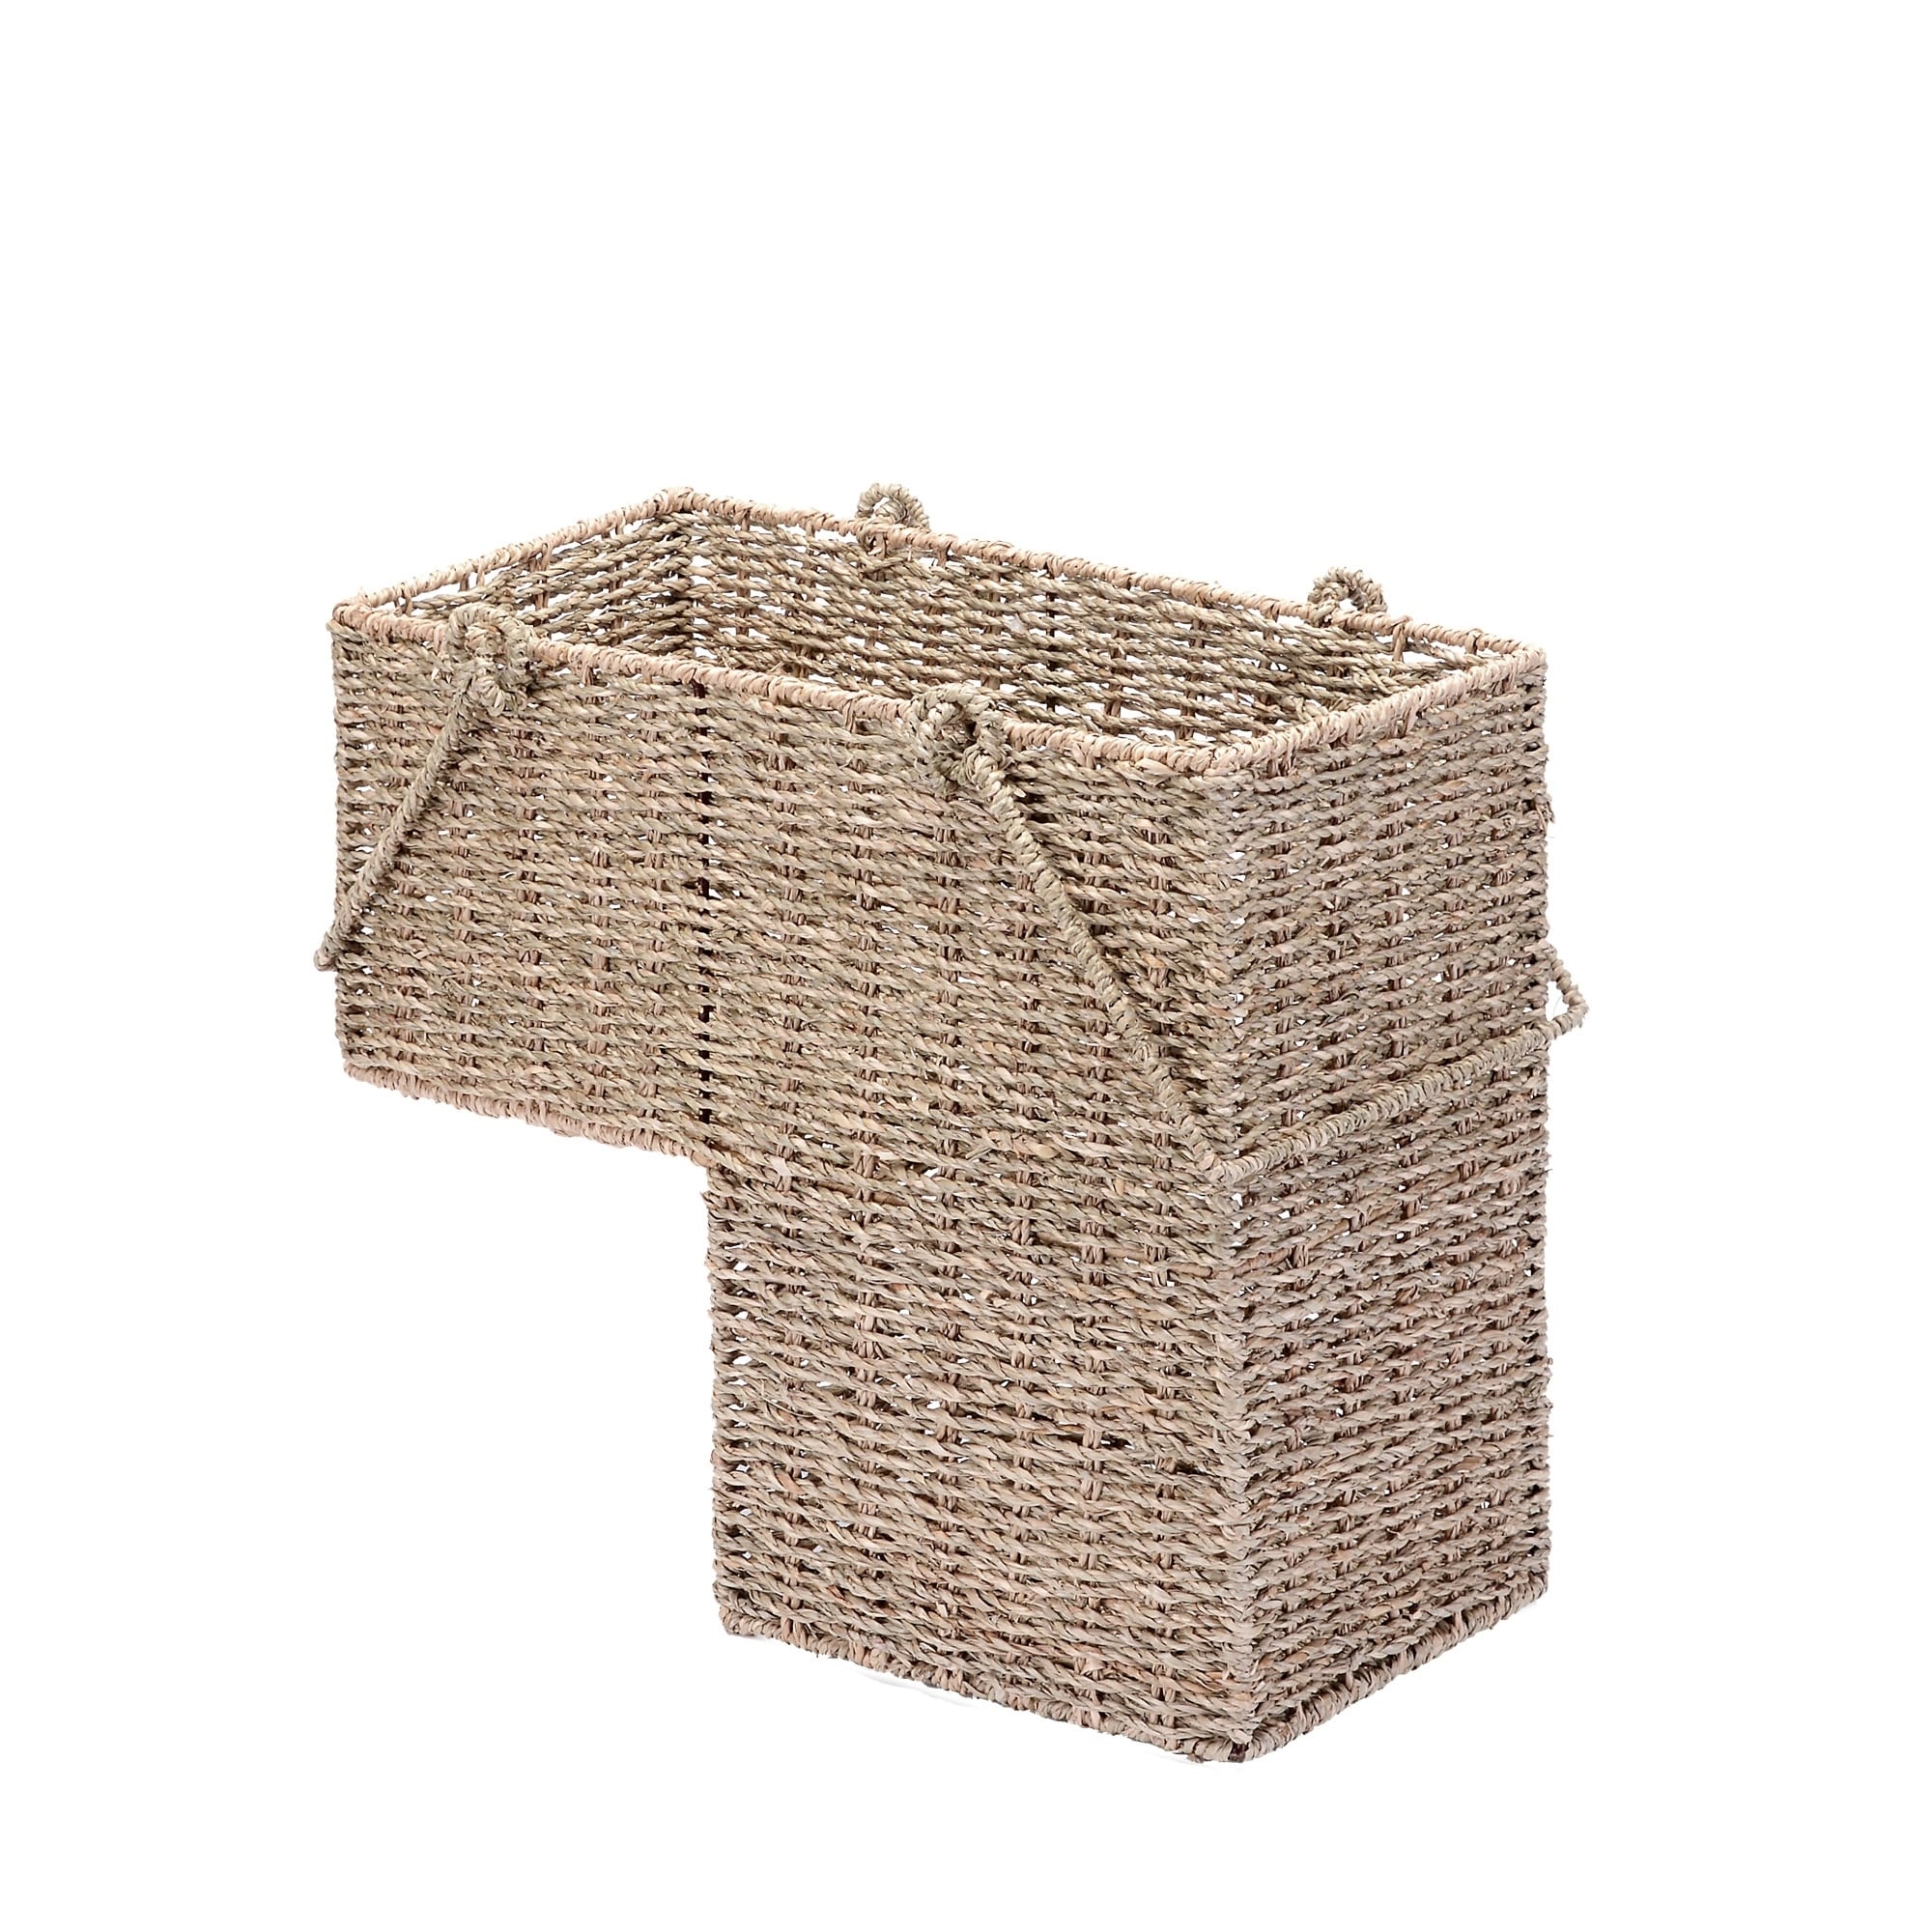 Villacera 14-Inch Wicker Stair Case Basket with Handles, Handmade